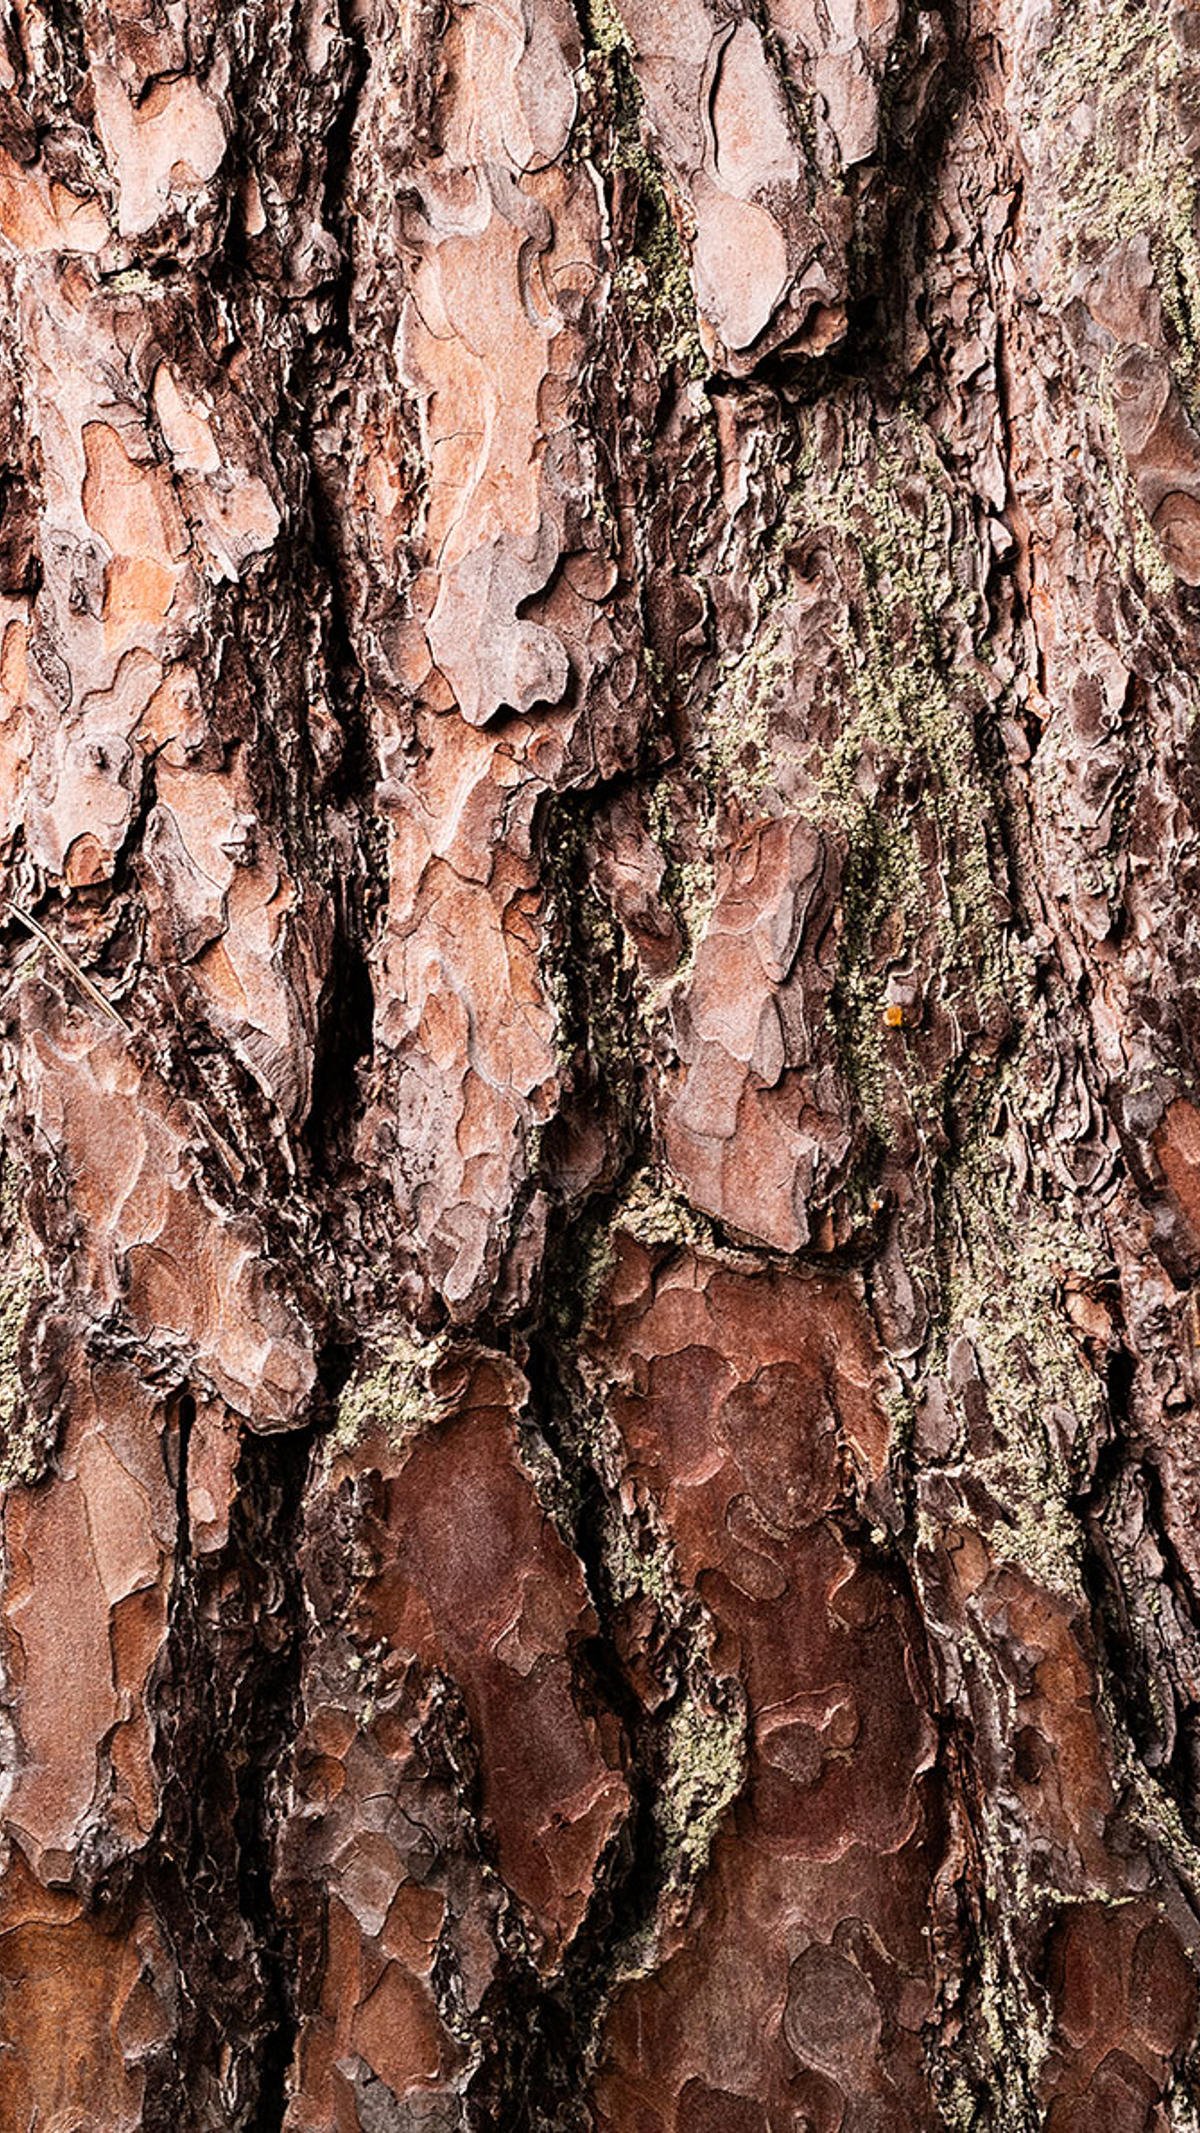 Pine tree bark in closeup detail